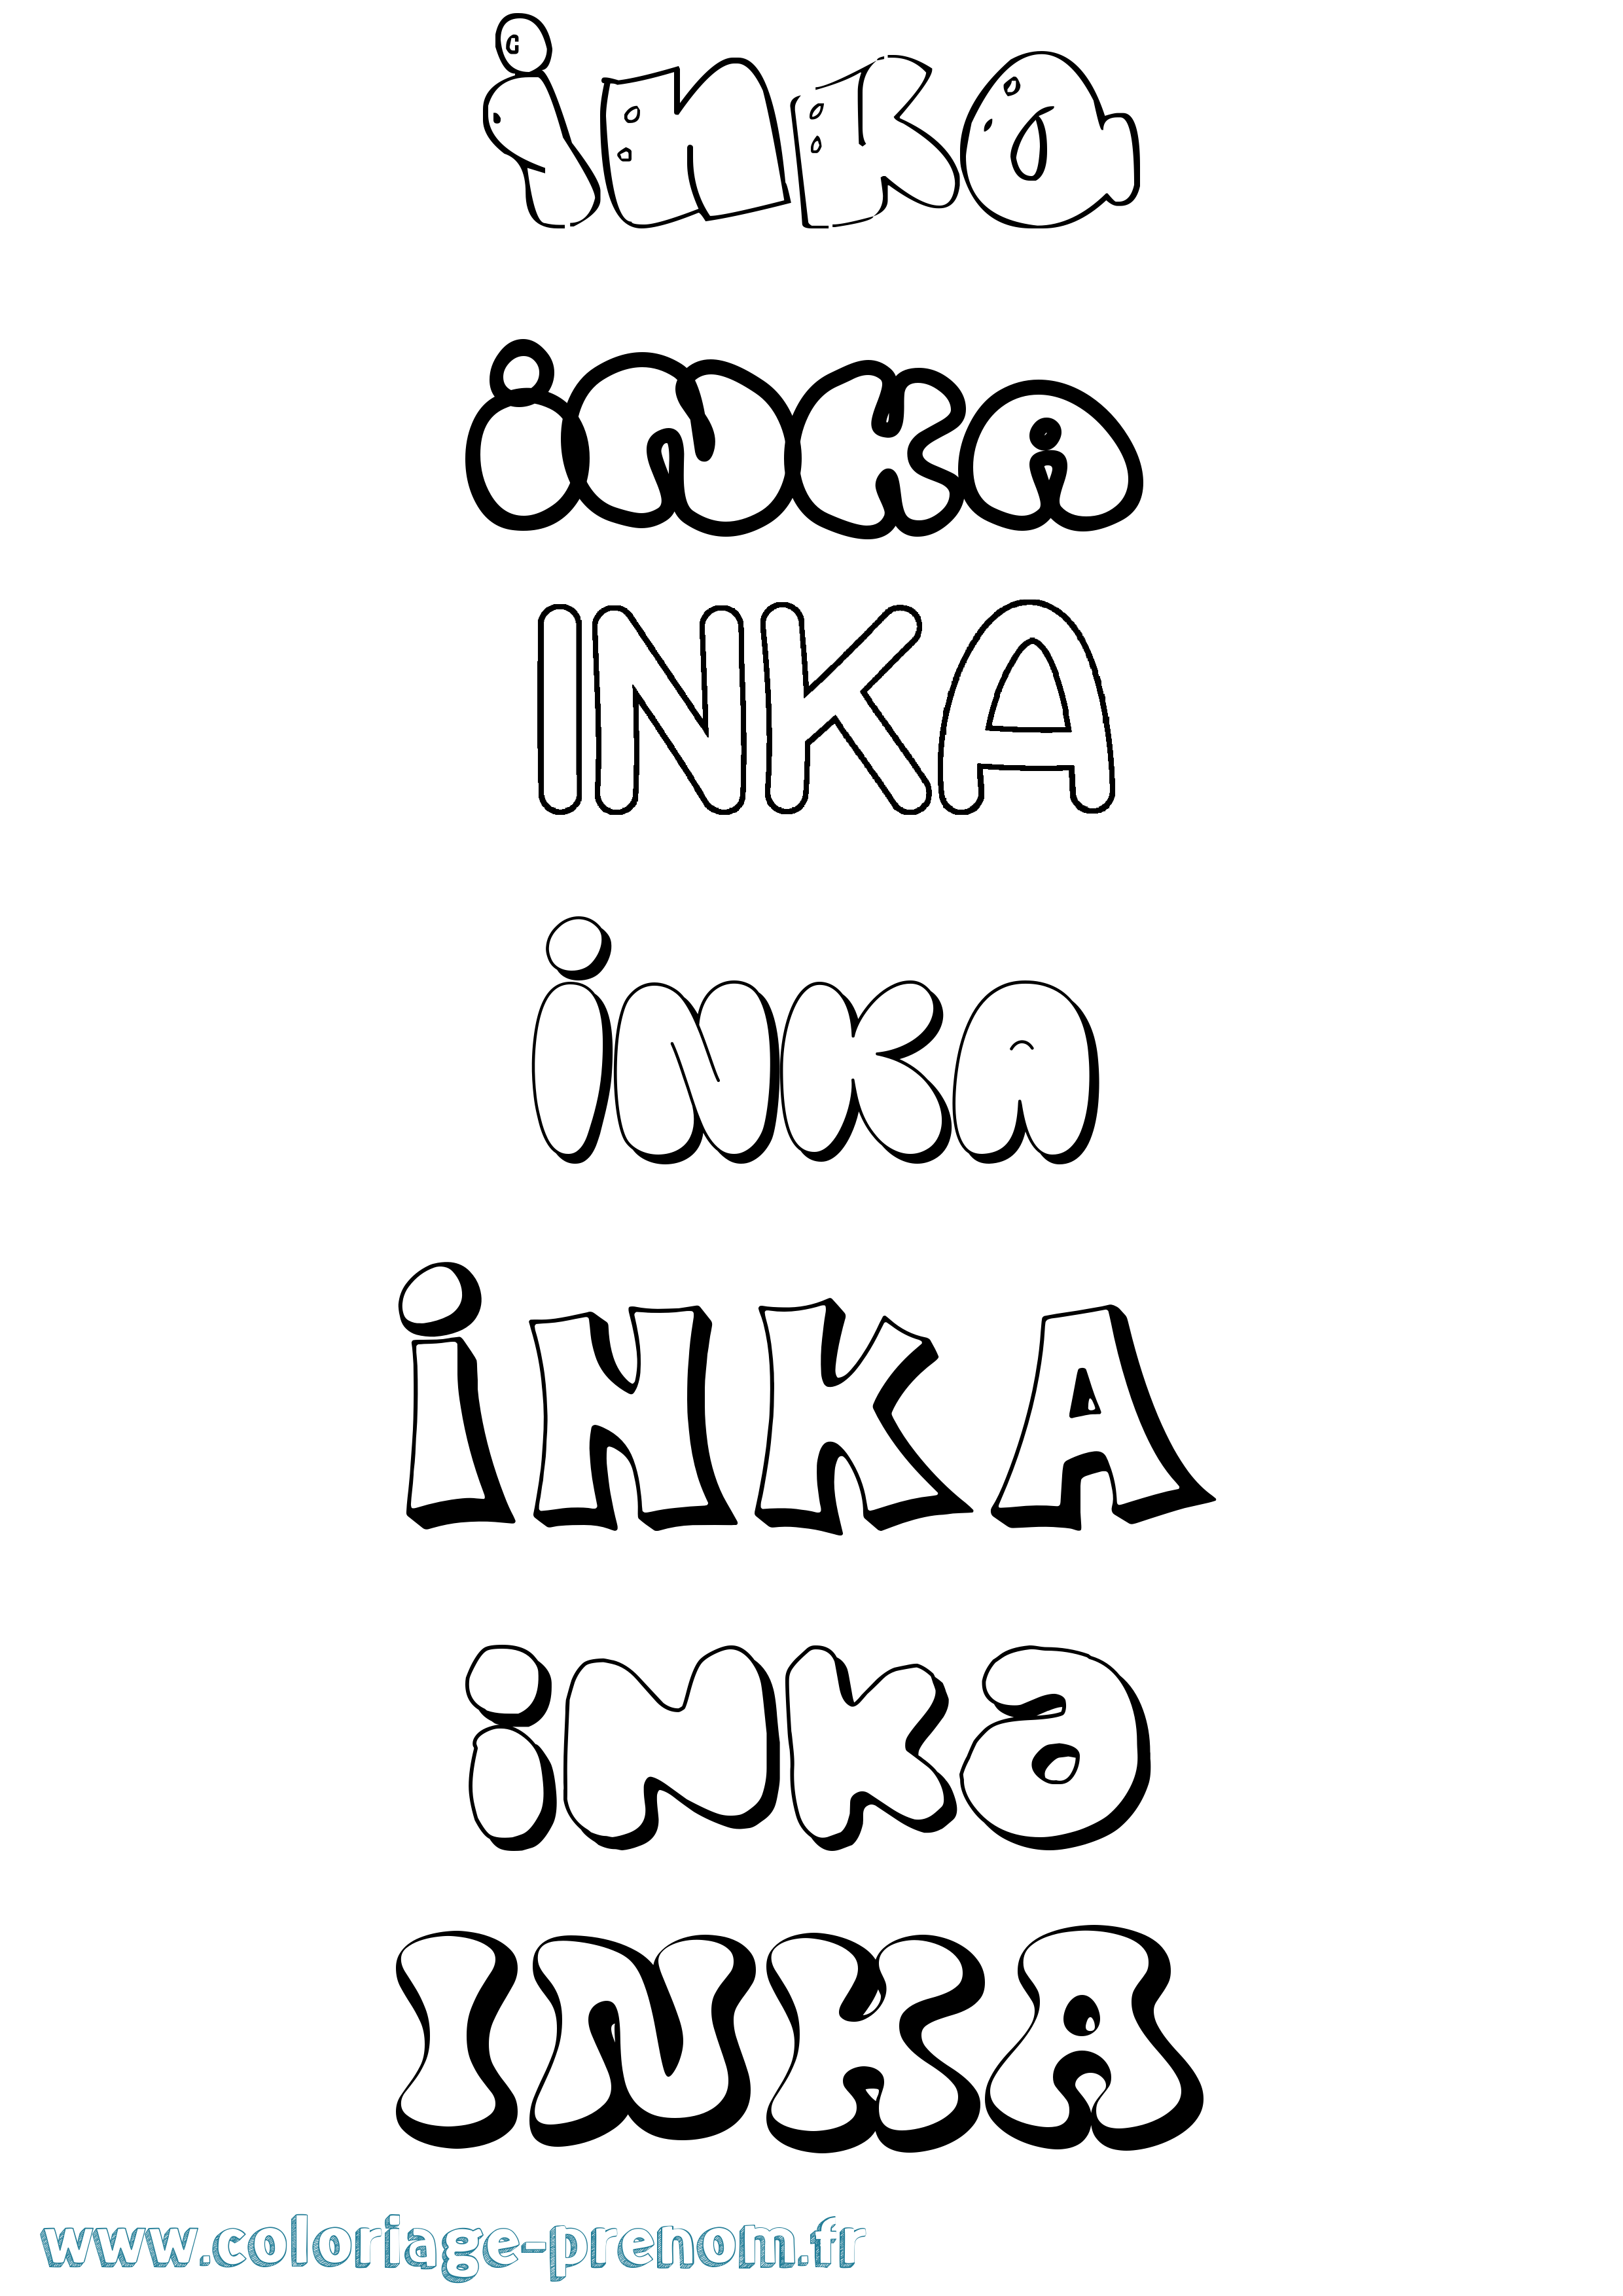 Coloriage prénom Inka Bubble